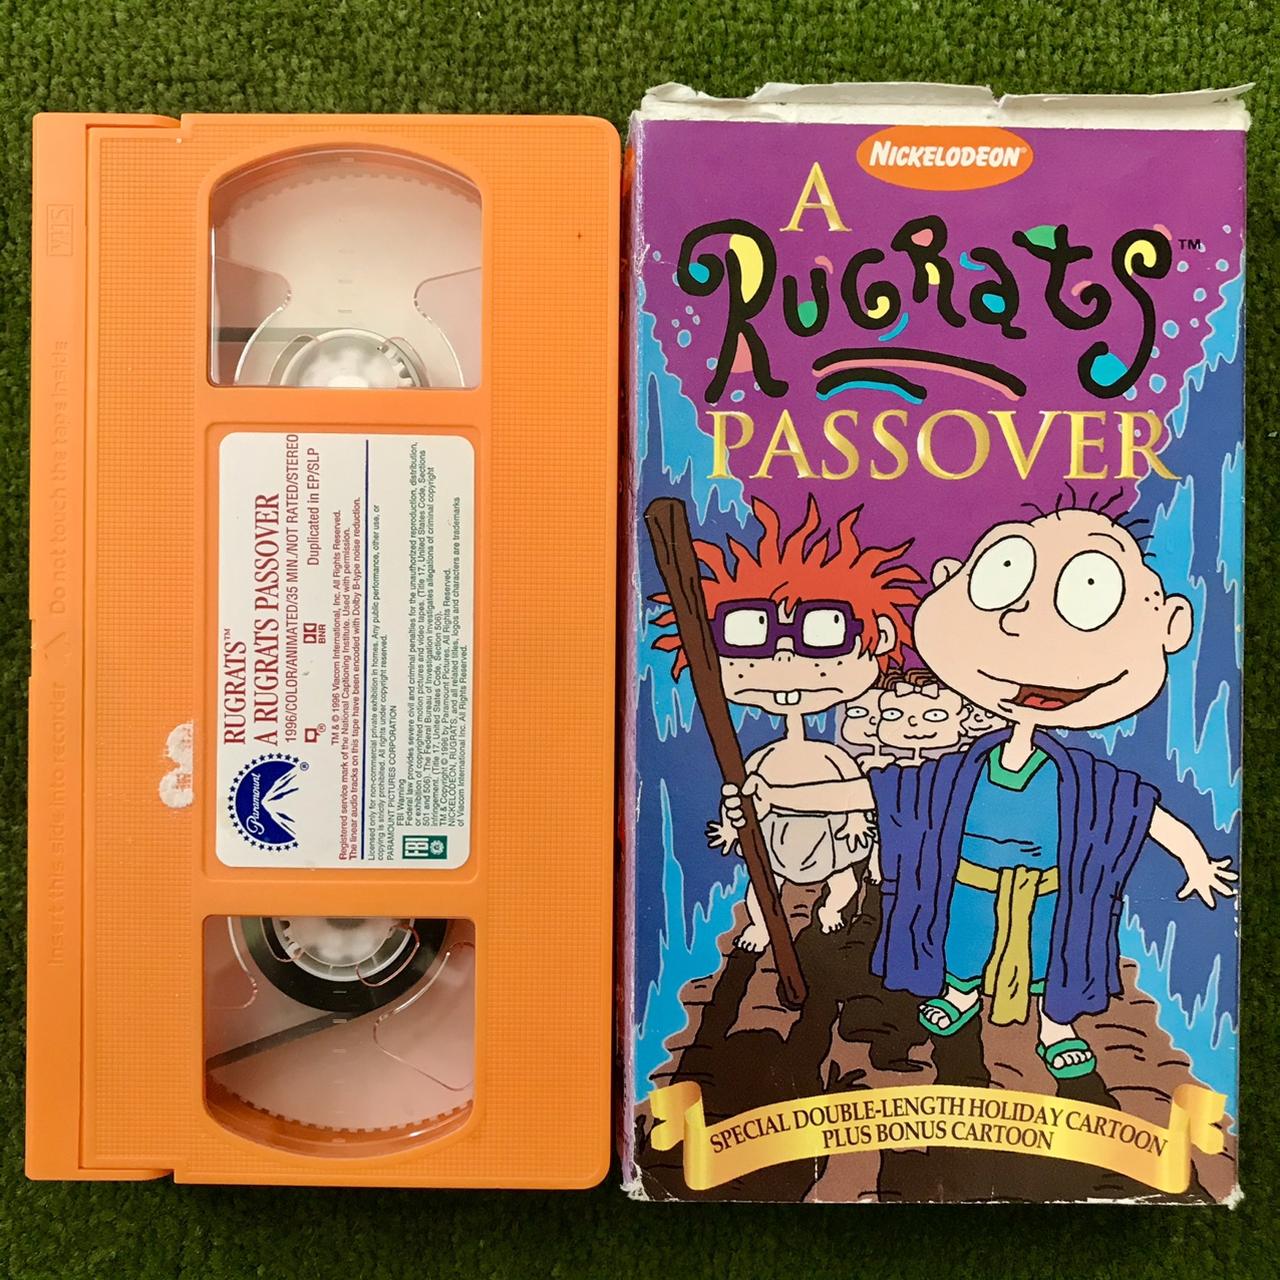 Rugrats Passover VHS cassette tape. Let my babies... - Depop